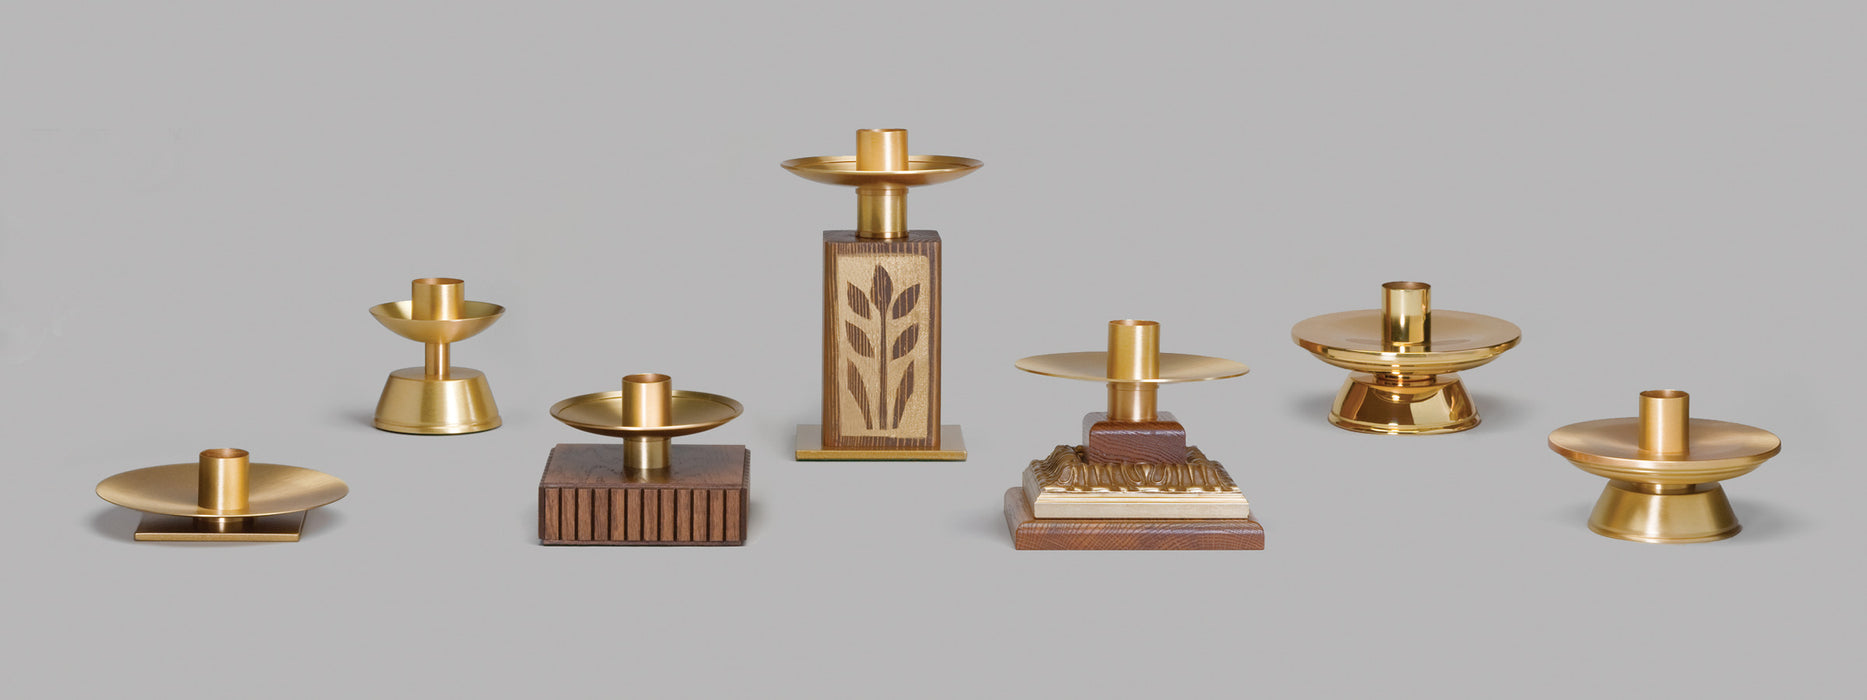 Altar Candlesticks with Wheat Motifs, Each